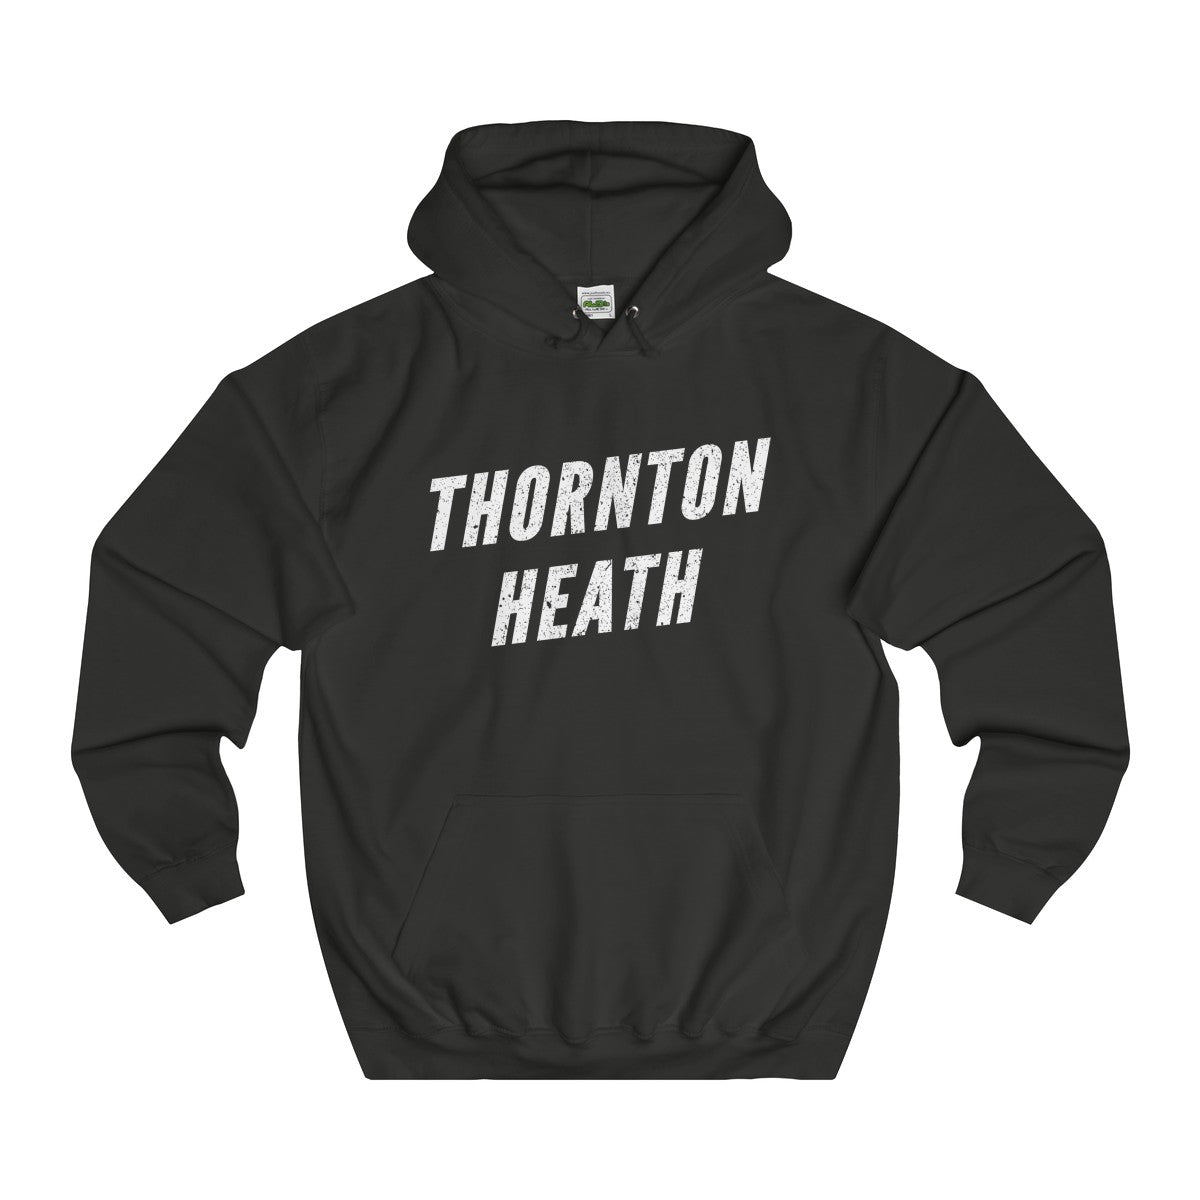 Thornton Heath Hoodie